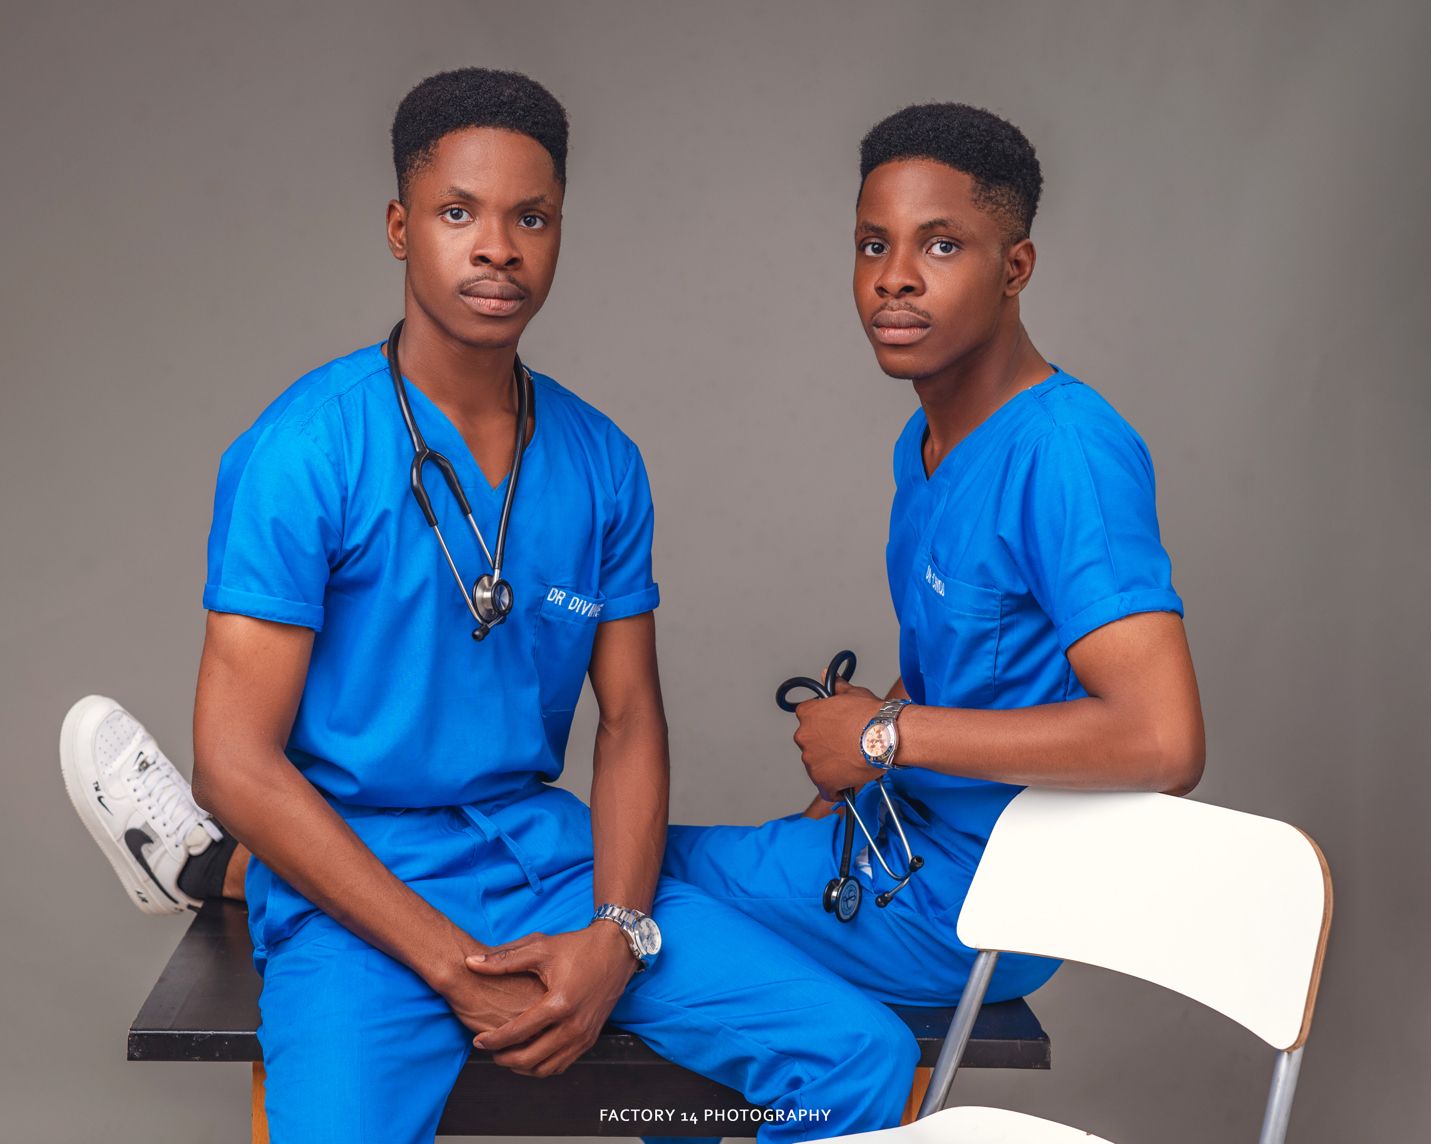 Nigerian Identical Twins Graduate as Medical Doctors